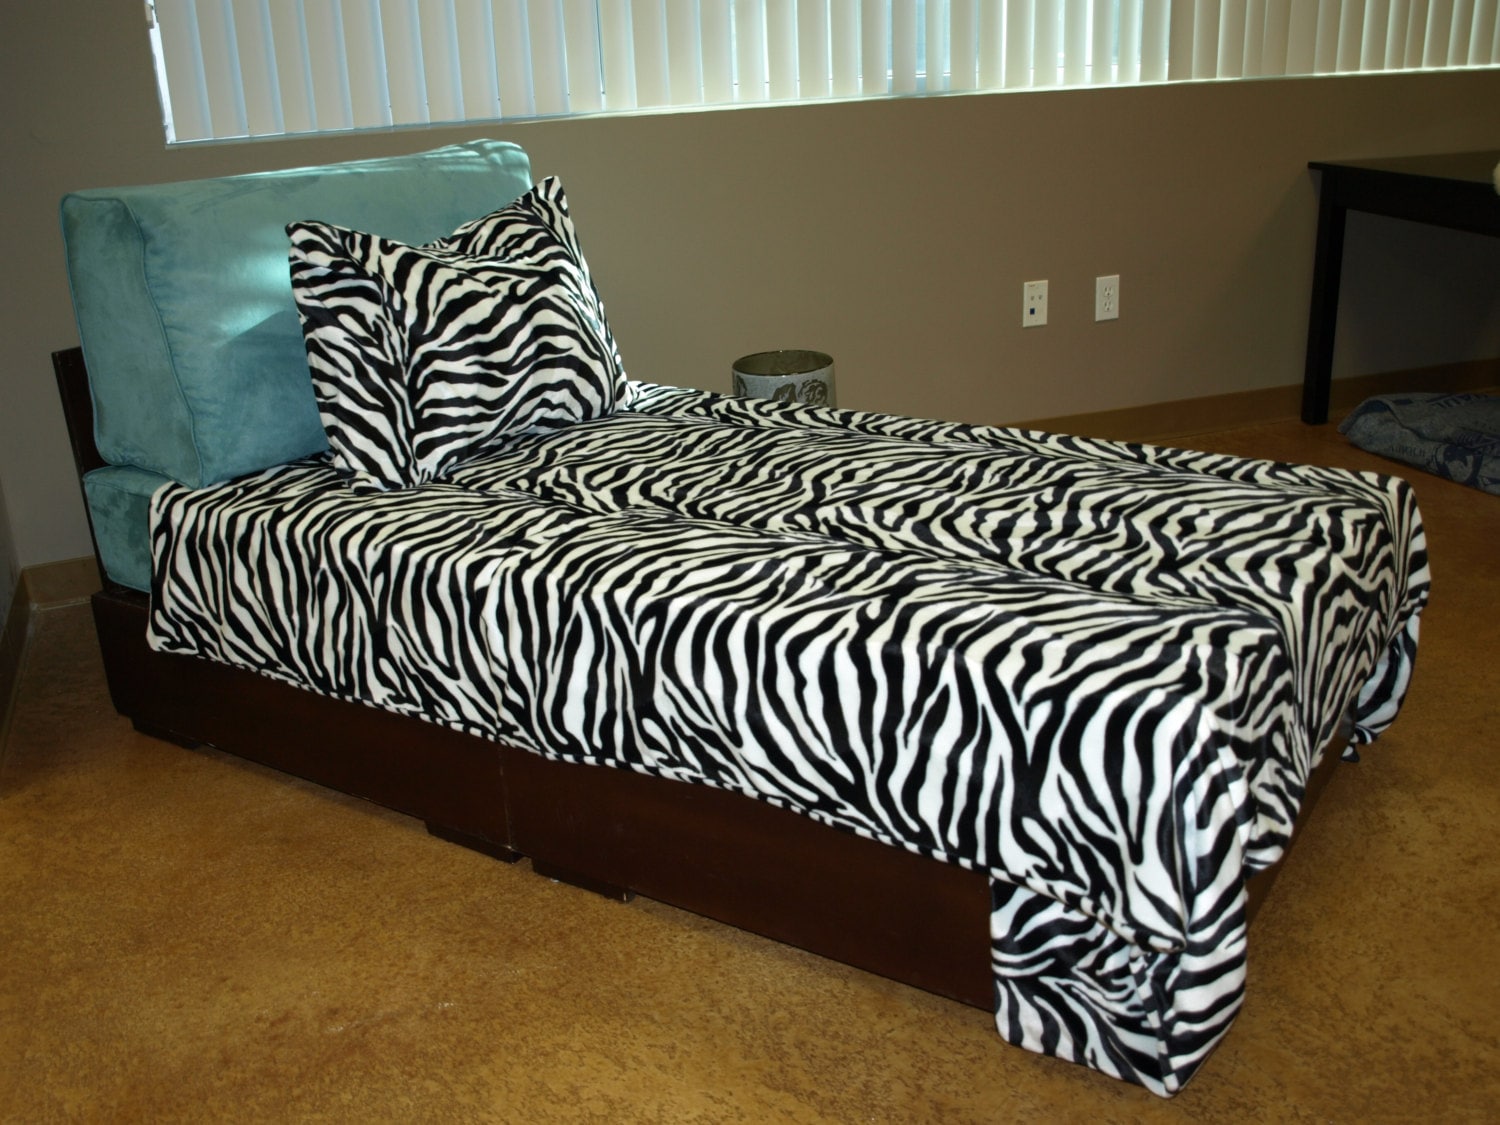 Zebra Coverlet Bedspread Twin Or, What Size Is A Twin Xl Bedspread